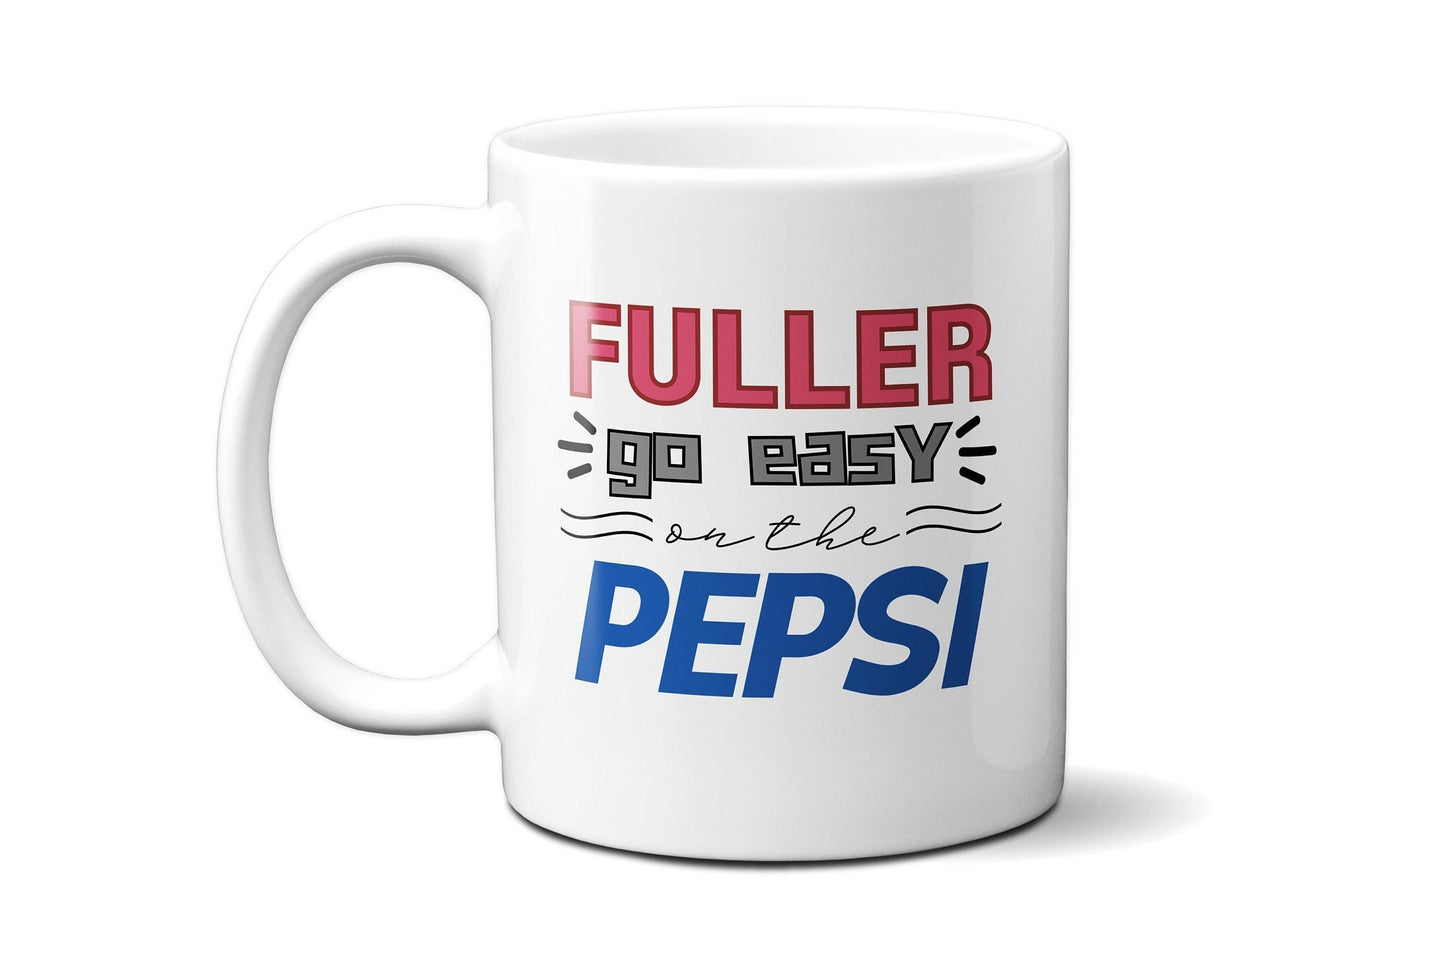 Fuller Go Easy On The Pepsi Mug | Kevin McCallister Mug | Home Alone Mug